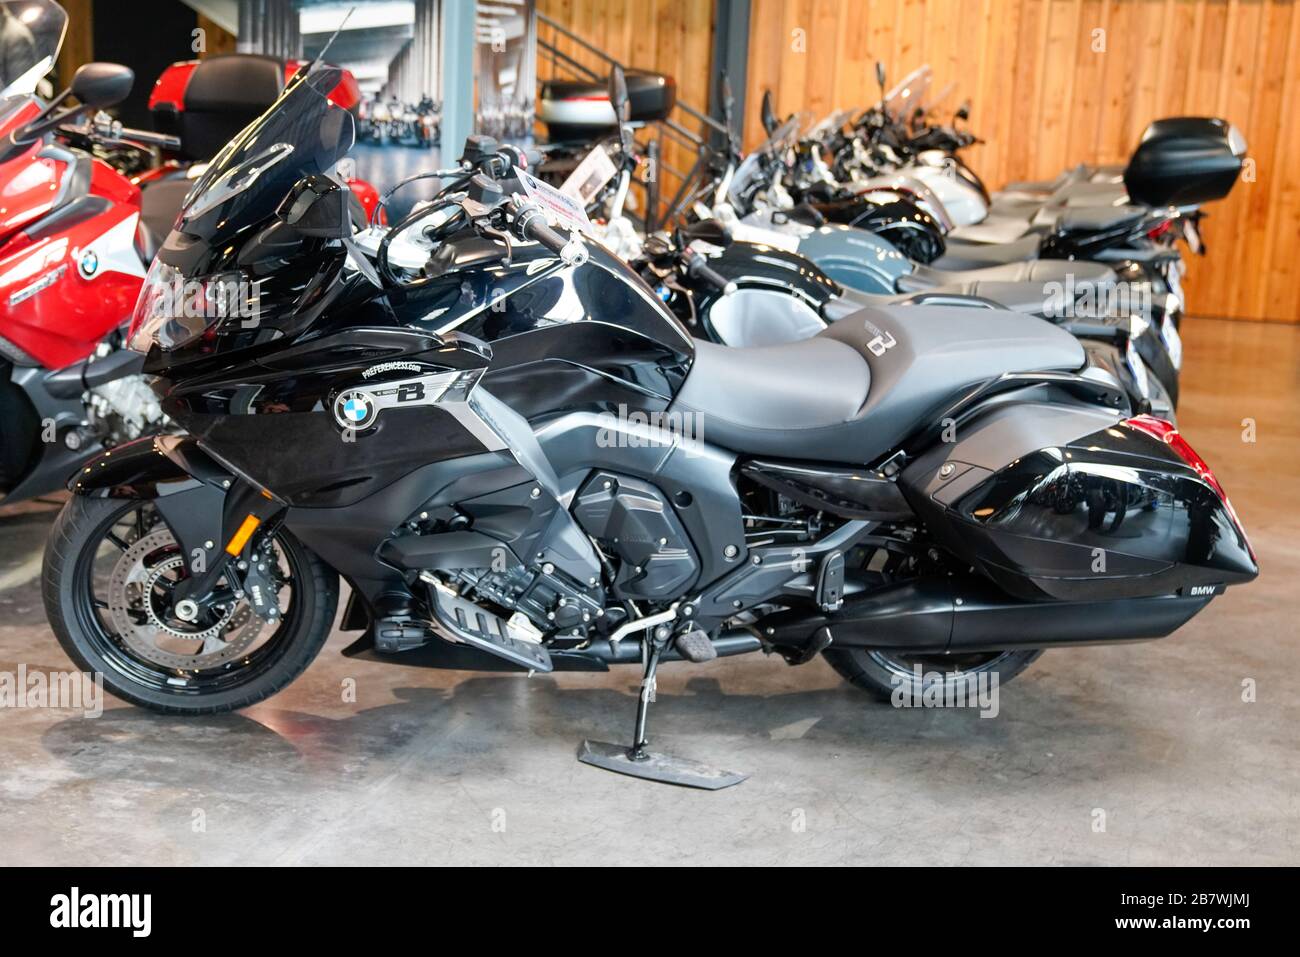 Bordeaux , Aquitaine / France - 02 15 2020 : BMW Motorrad K1600 b bagger  motorcycle on display dealership motorbike shop Stock Photo - Alamy